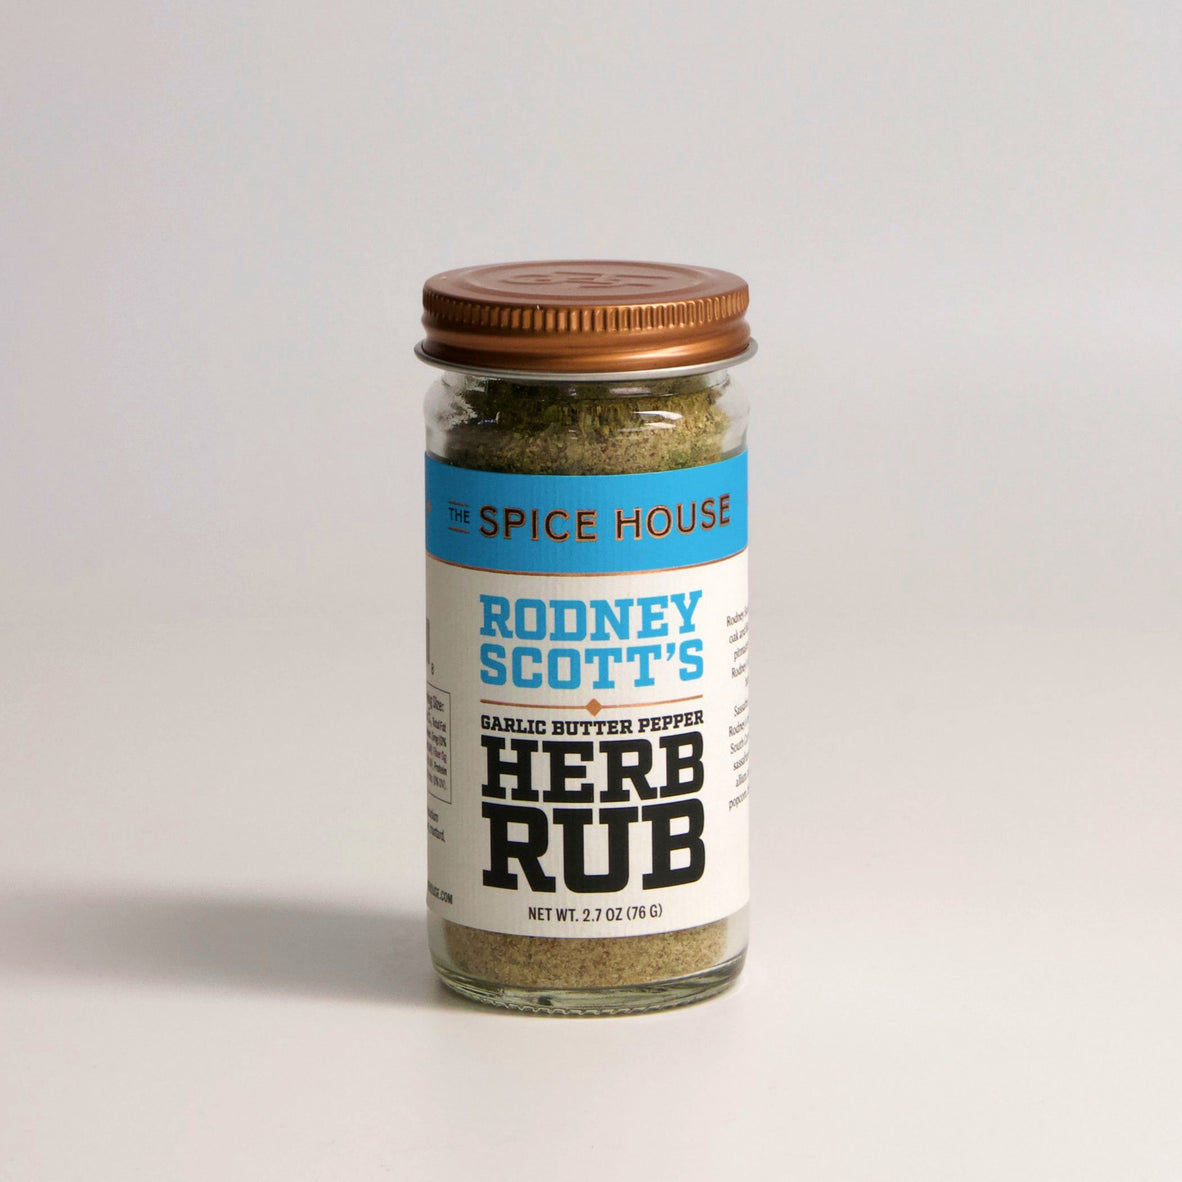 Rodney Scott - Garlic Butter Pepper Herb Rub